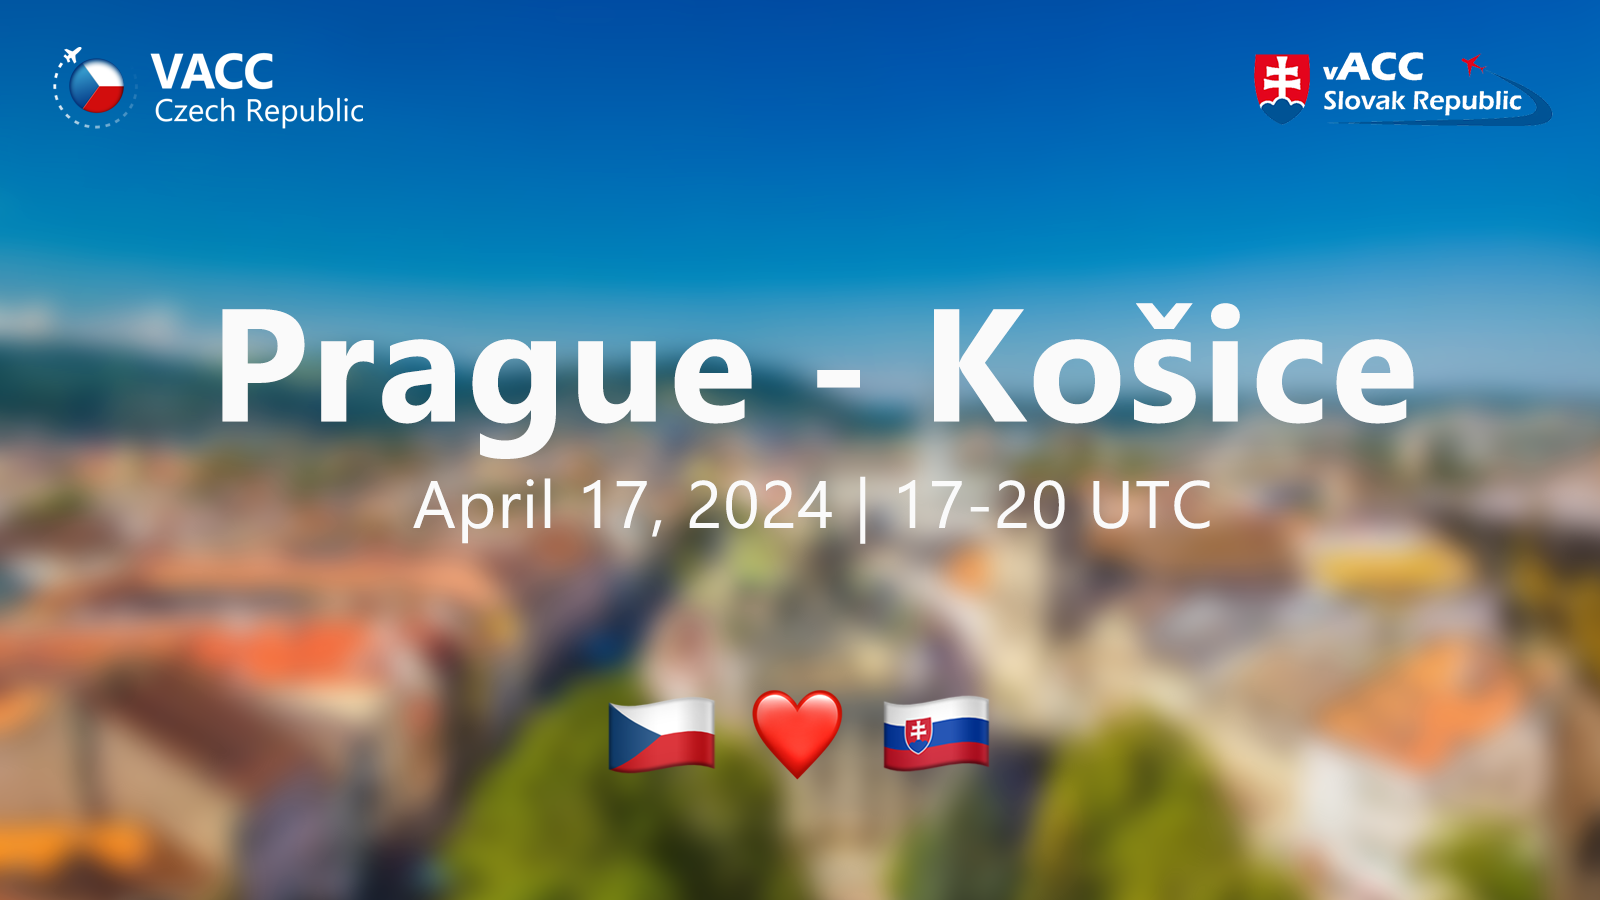 Prague - Košice Shuttle - Virtual Norwegian Events